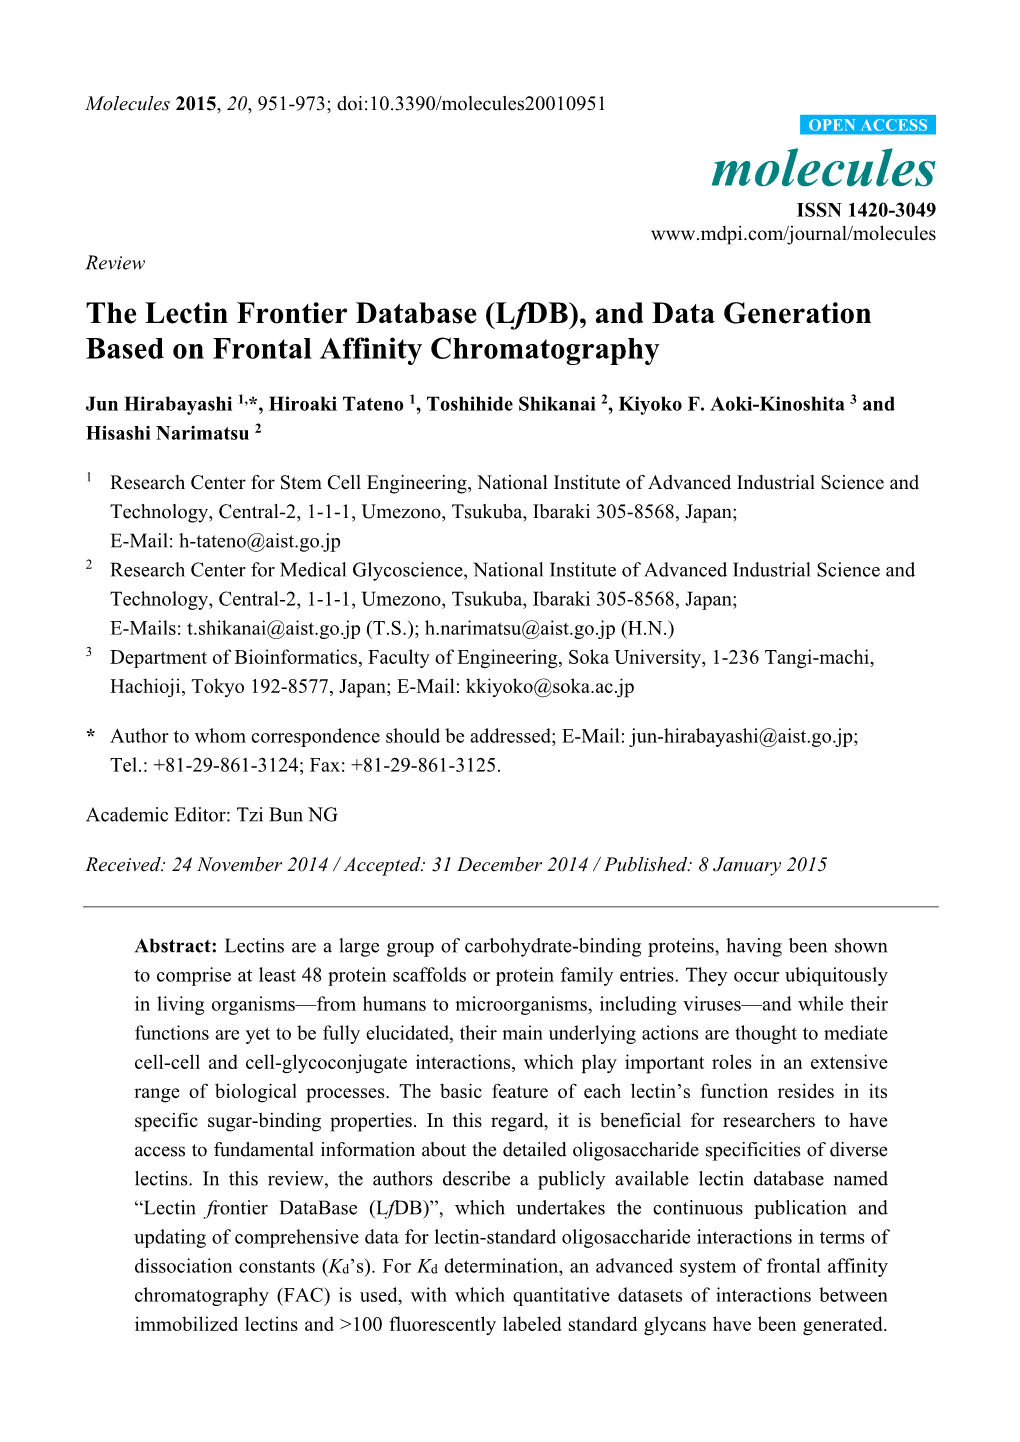 Lfdb), and Data Generation Based on Frontal Affinity Chromatography